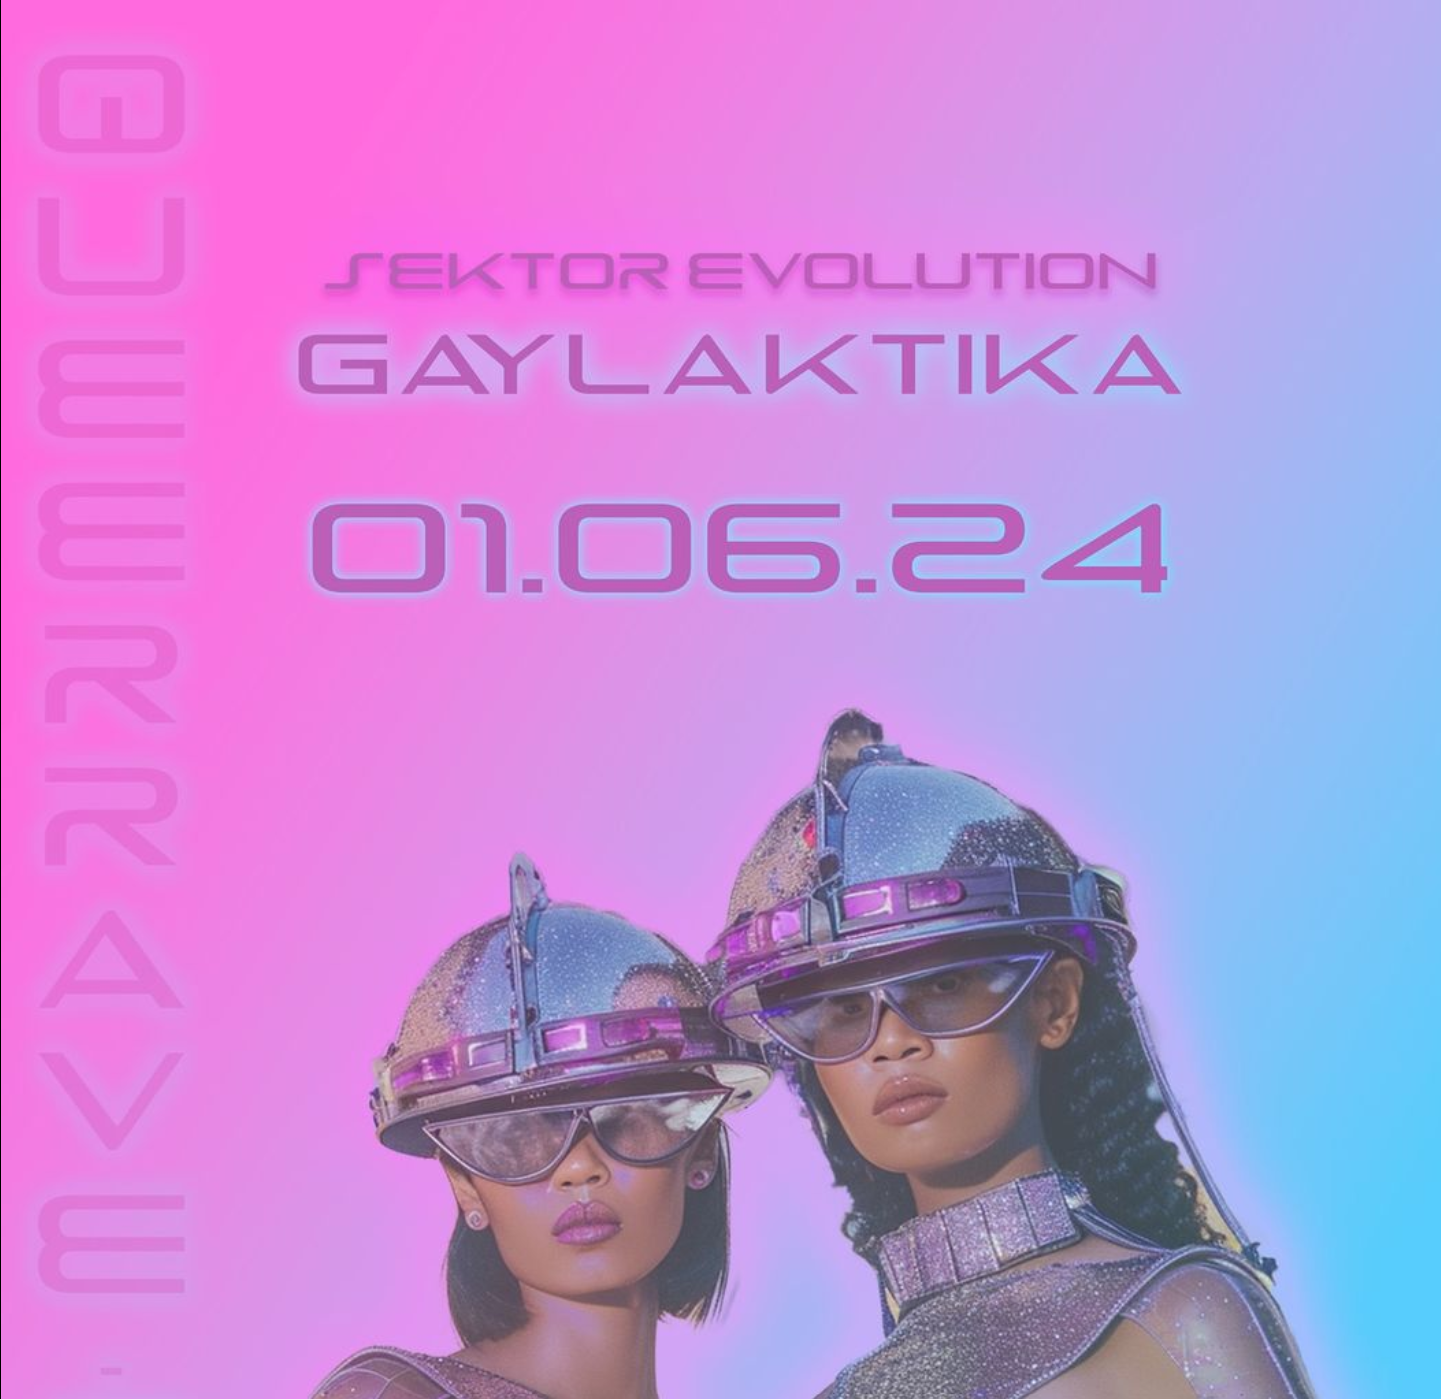 Queer Rave Gaylaktika